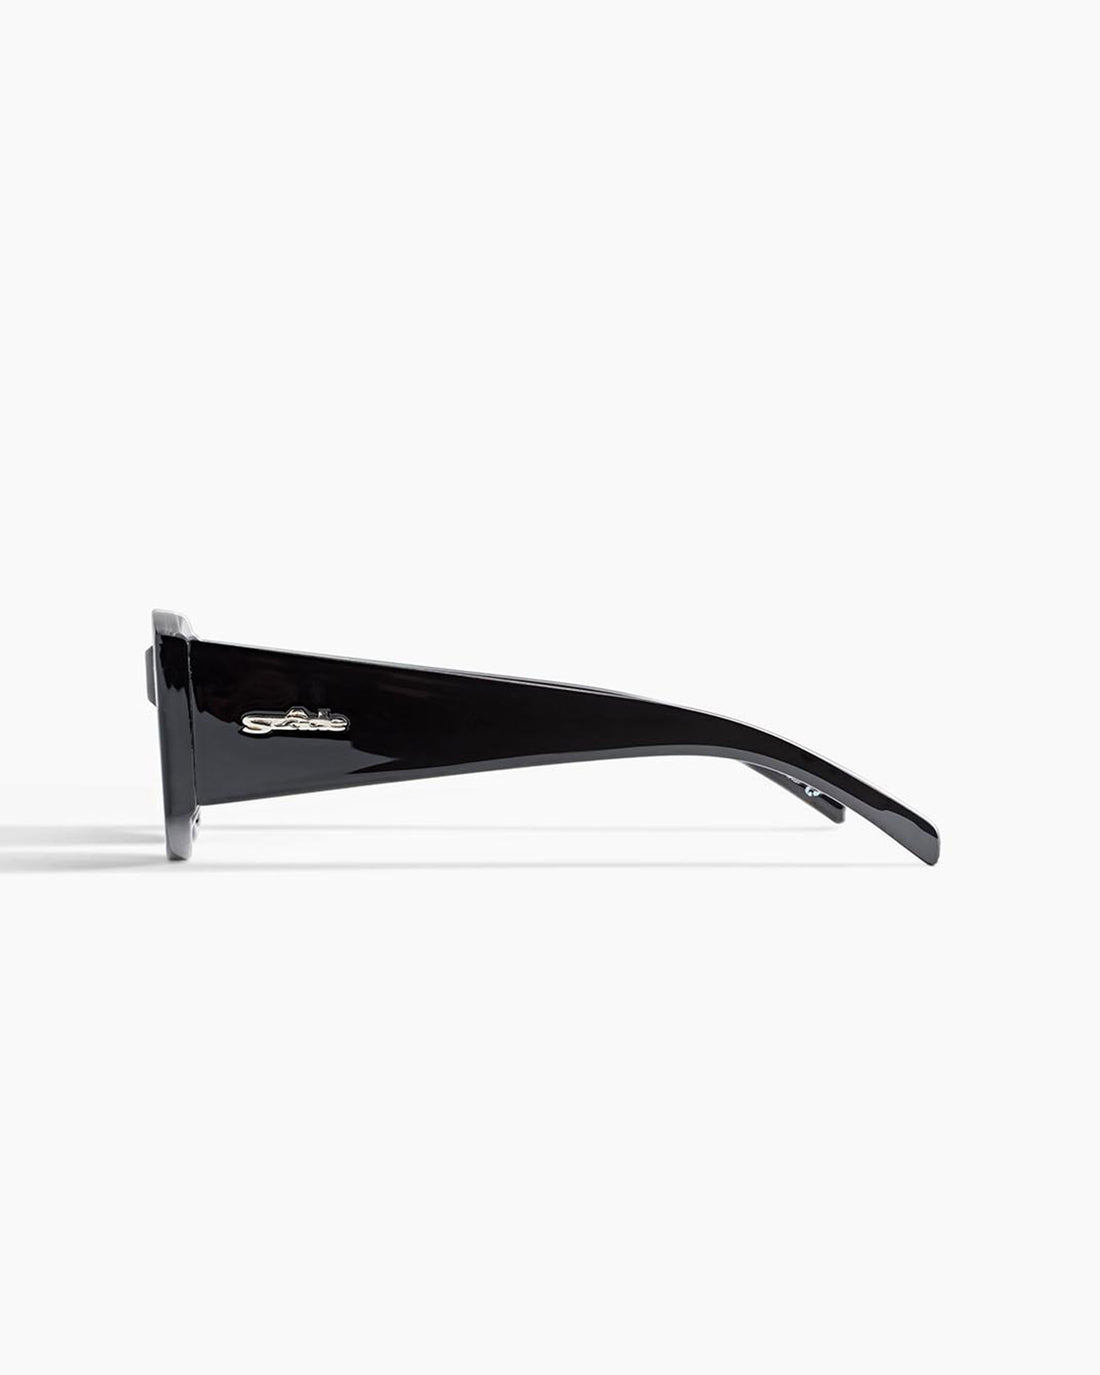 Shop Szade Cave Sunglasses in Black Online | Szade Recycled AU